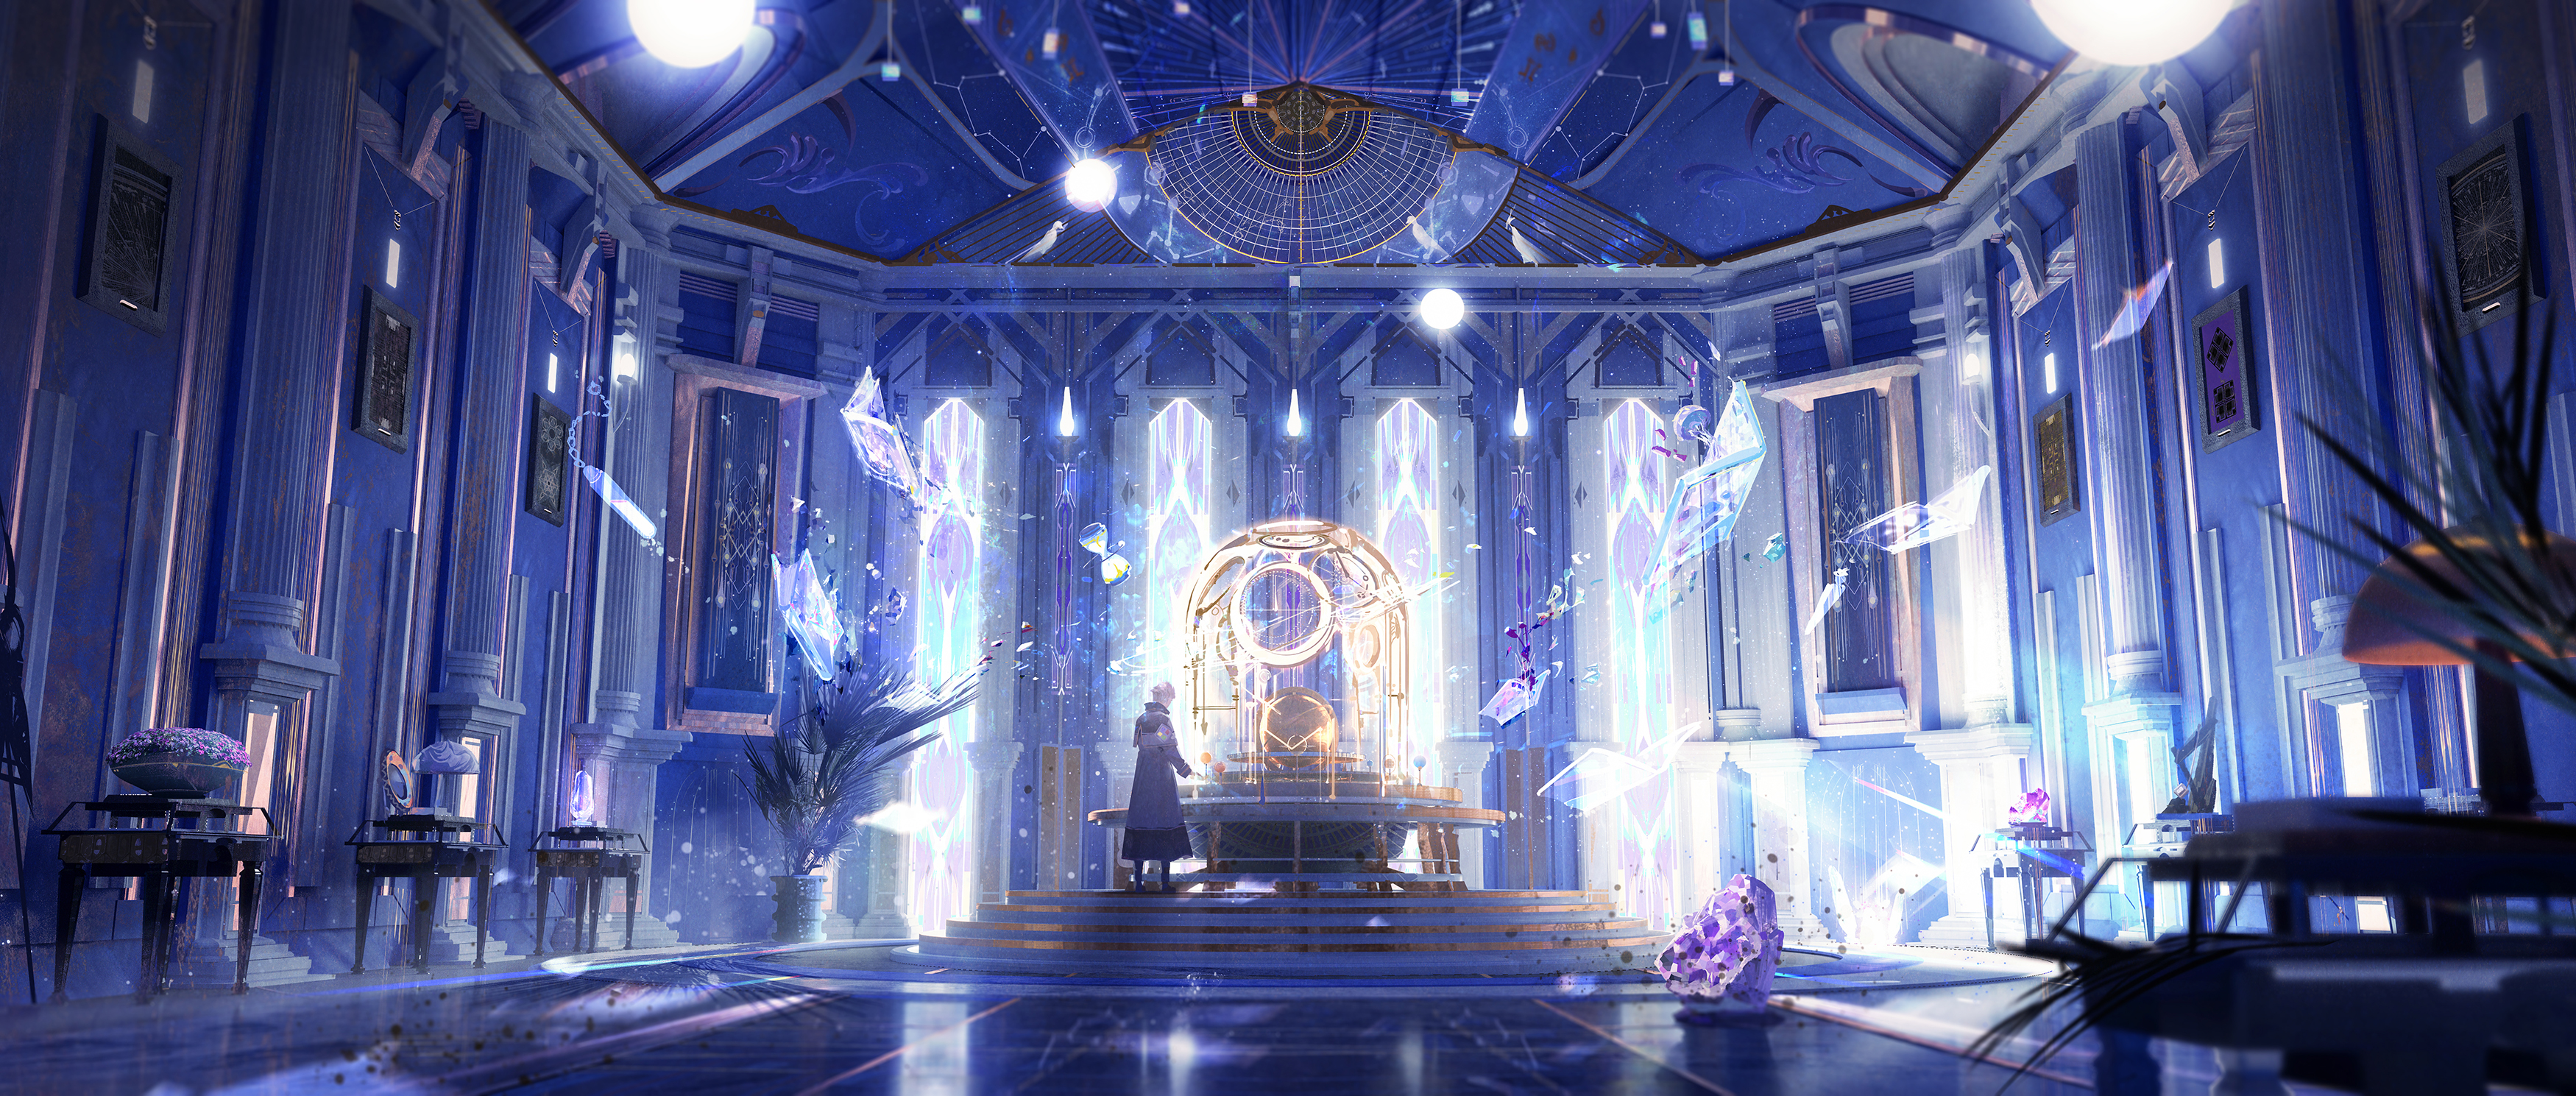 Throne room, Anime background, Fantasy art landscapes